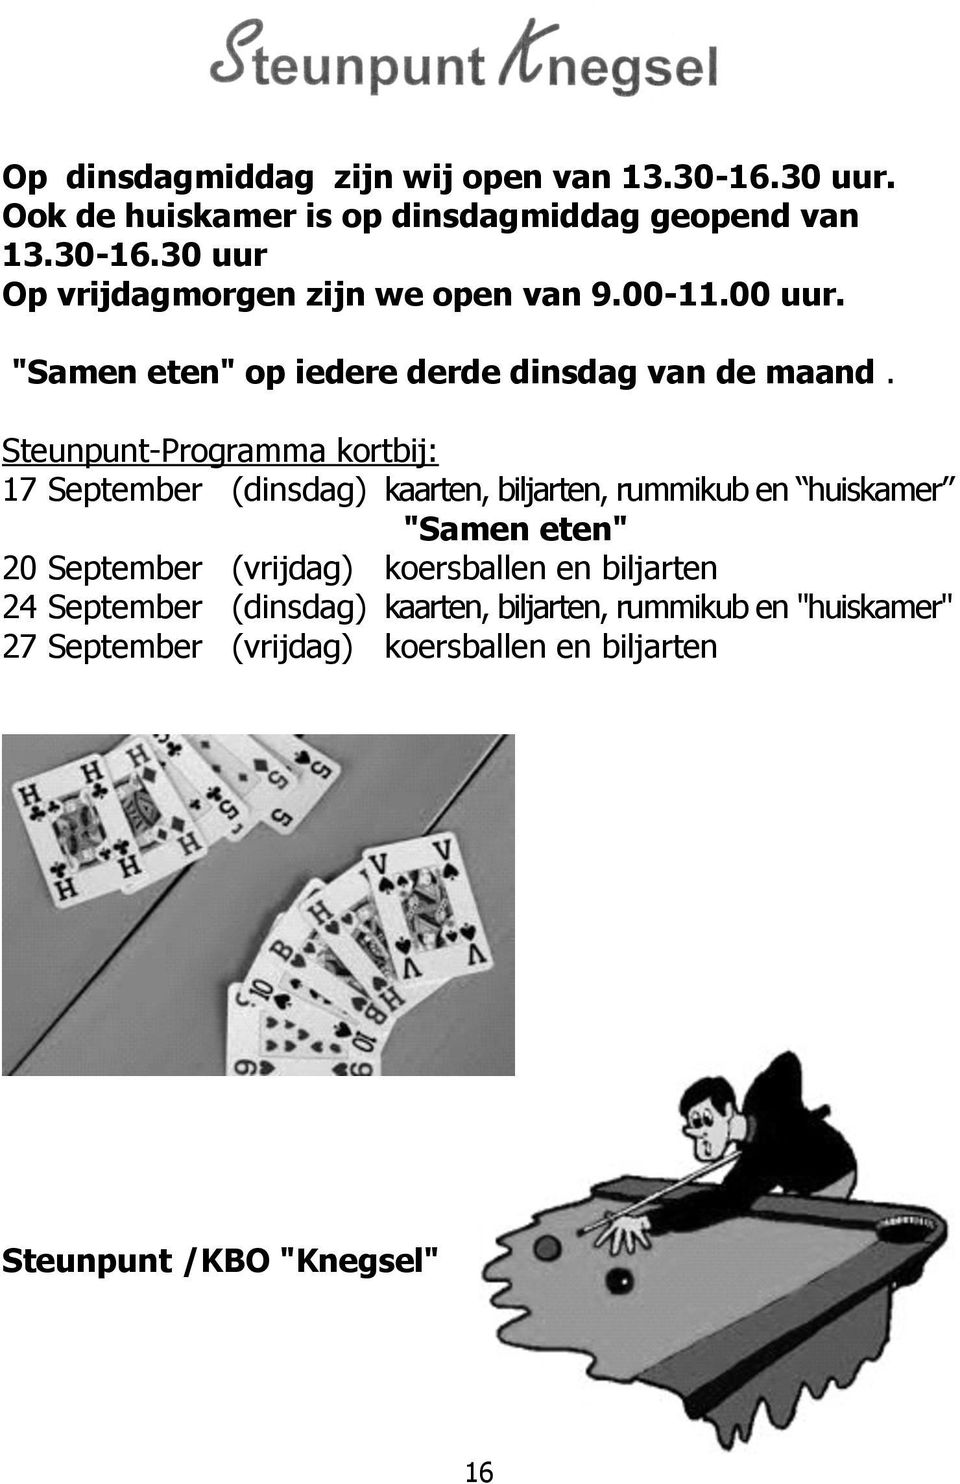 Steunpunt-Programma kortbij: 17 September (dinsdag) kaarten, biljarten, rummikub en huiskamer "Samen eten" 20 September